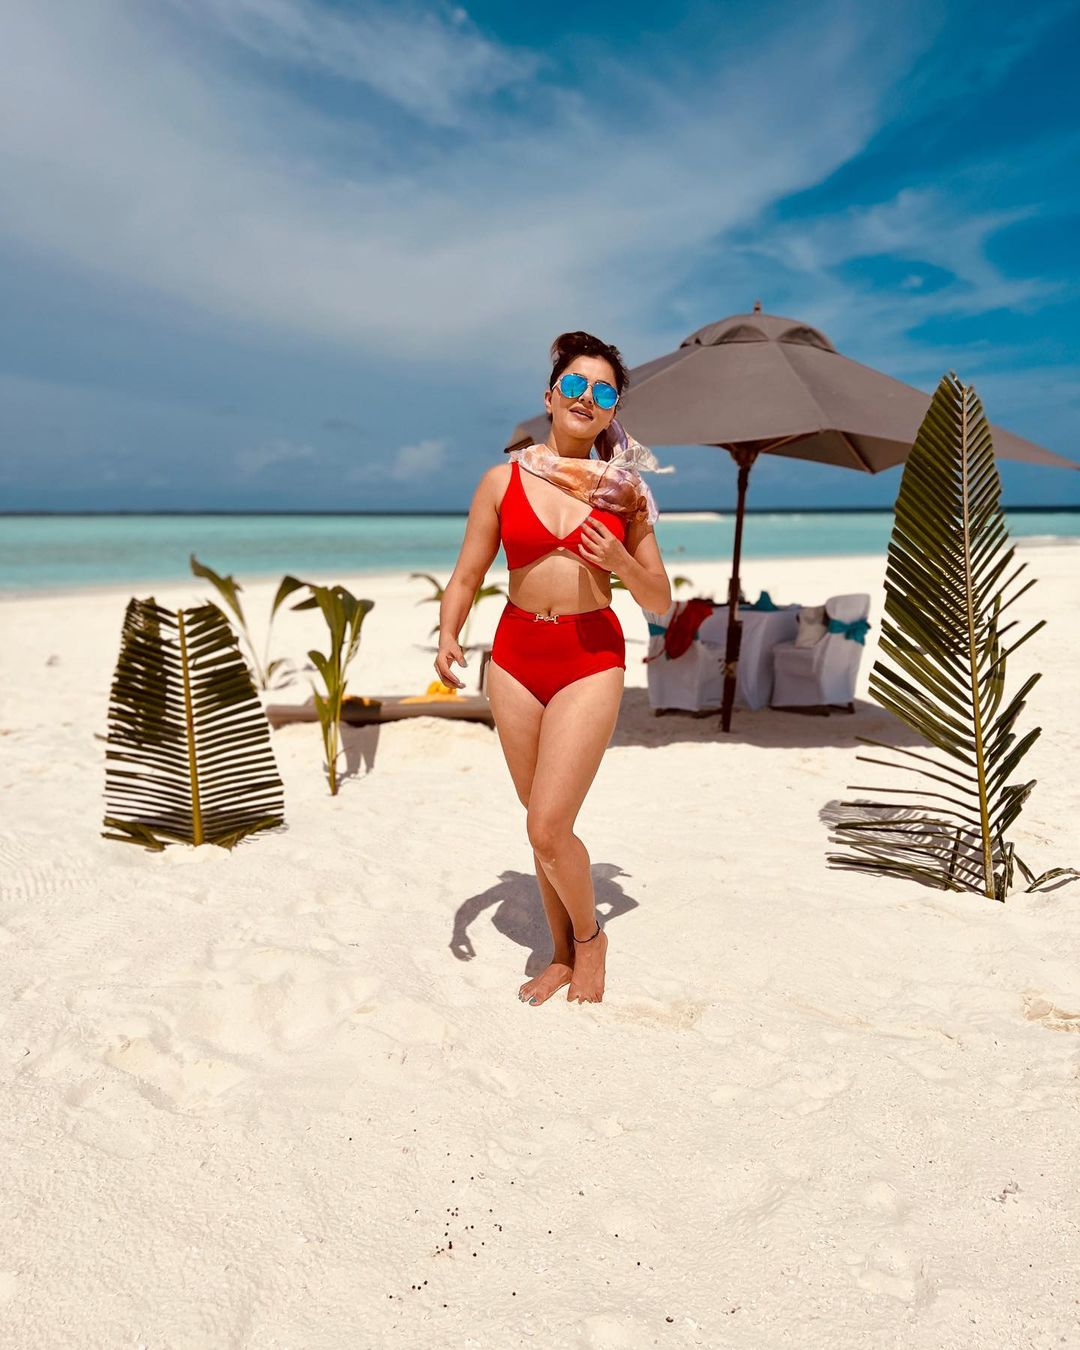 Rubina Dilaik looks scorching hot in the red bikini